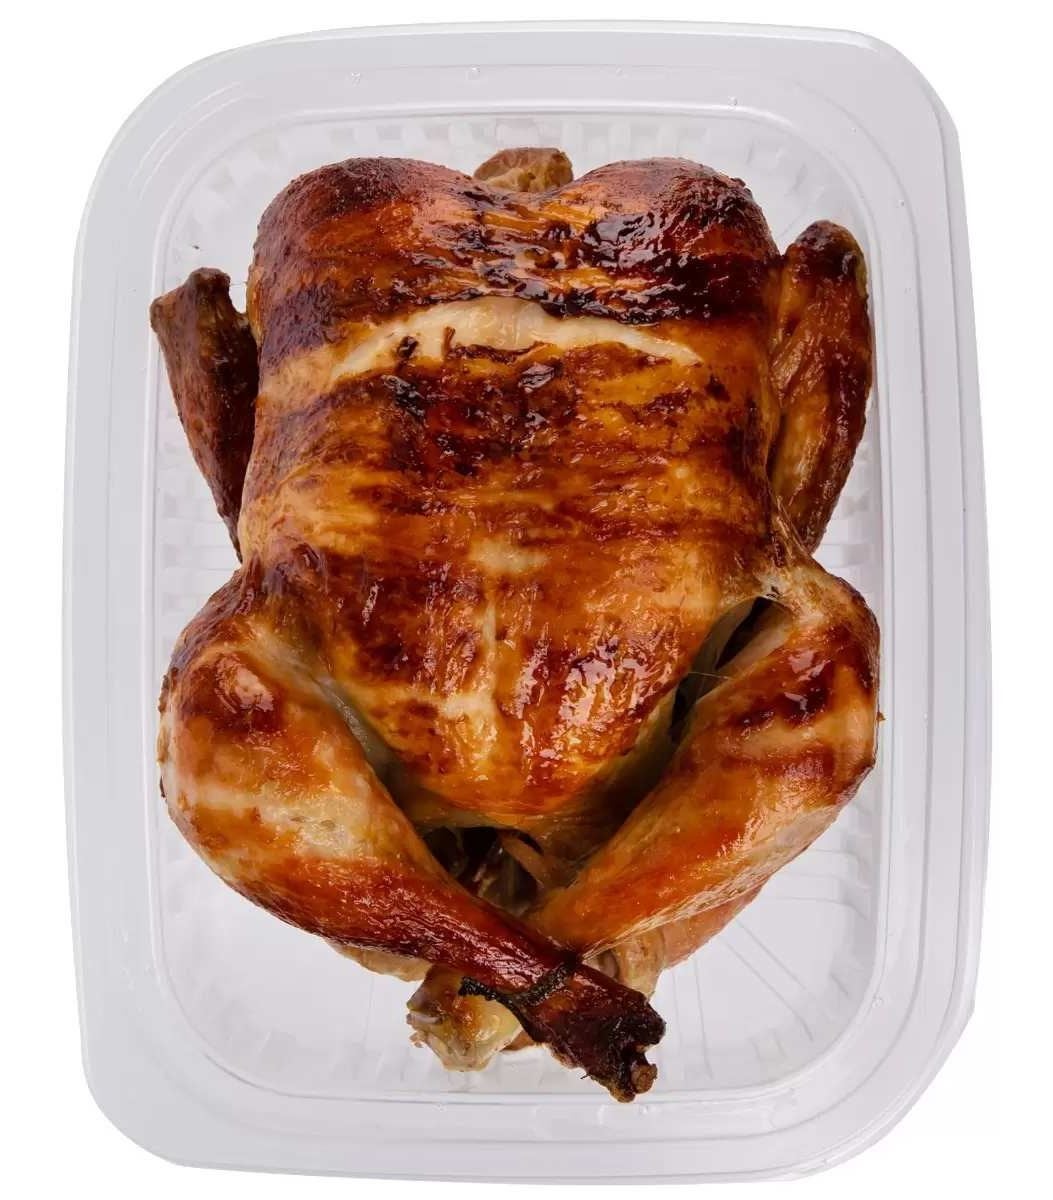 Costco roast chicken review